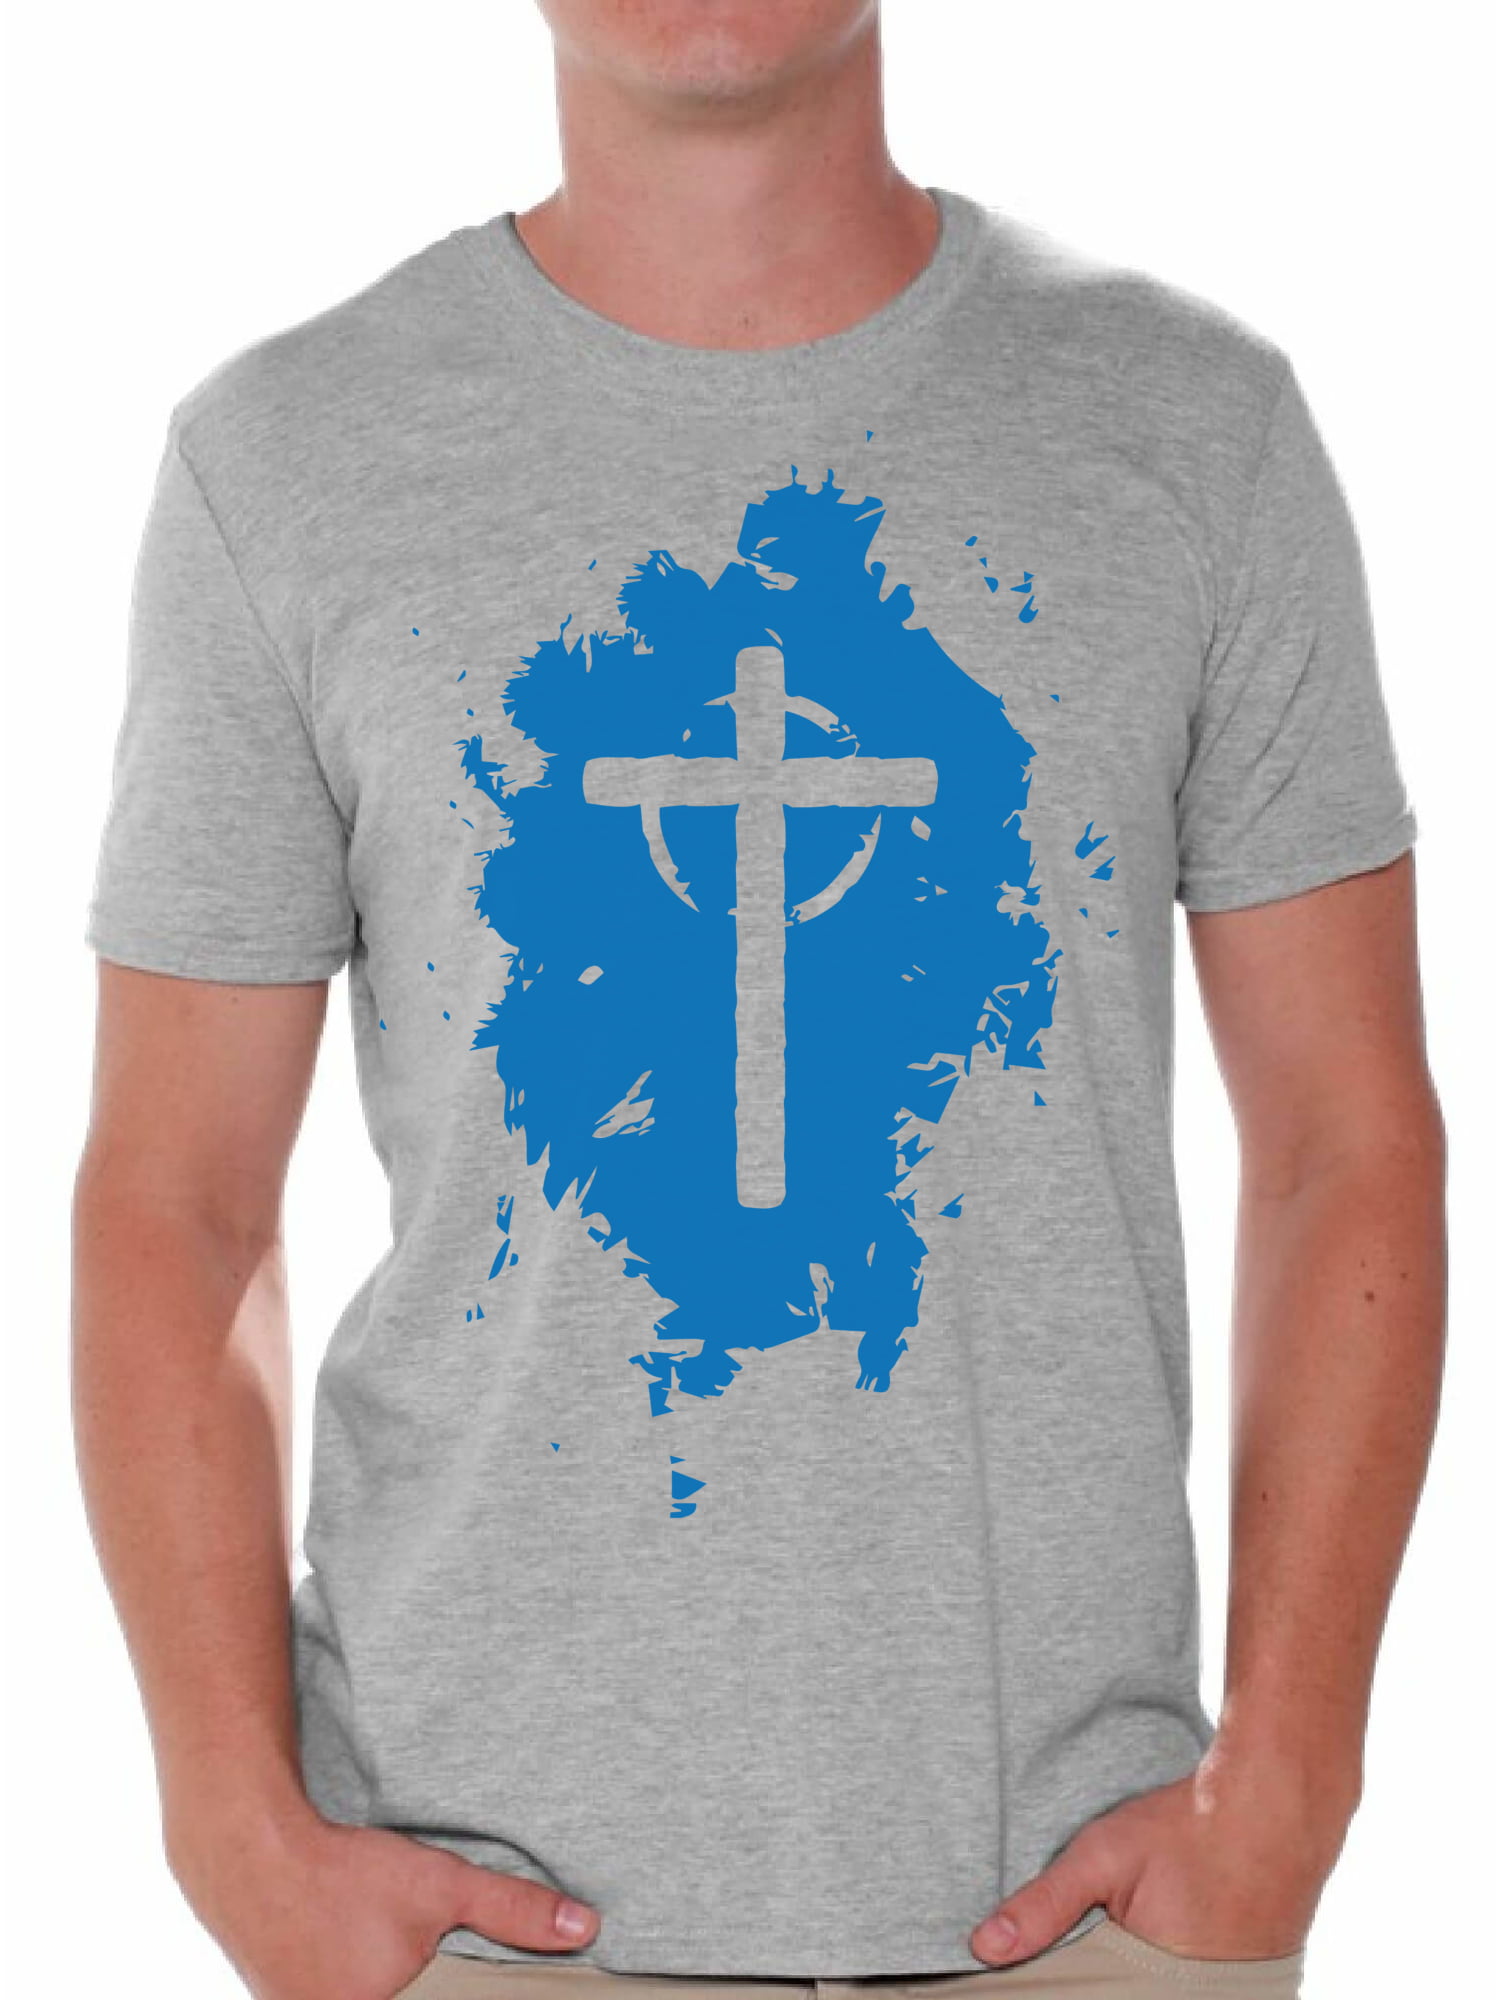 Awkward Styles Cross Shirt for Men Christian Mens Shirts Christian ...